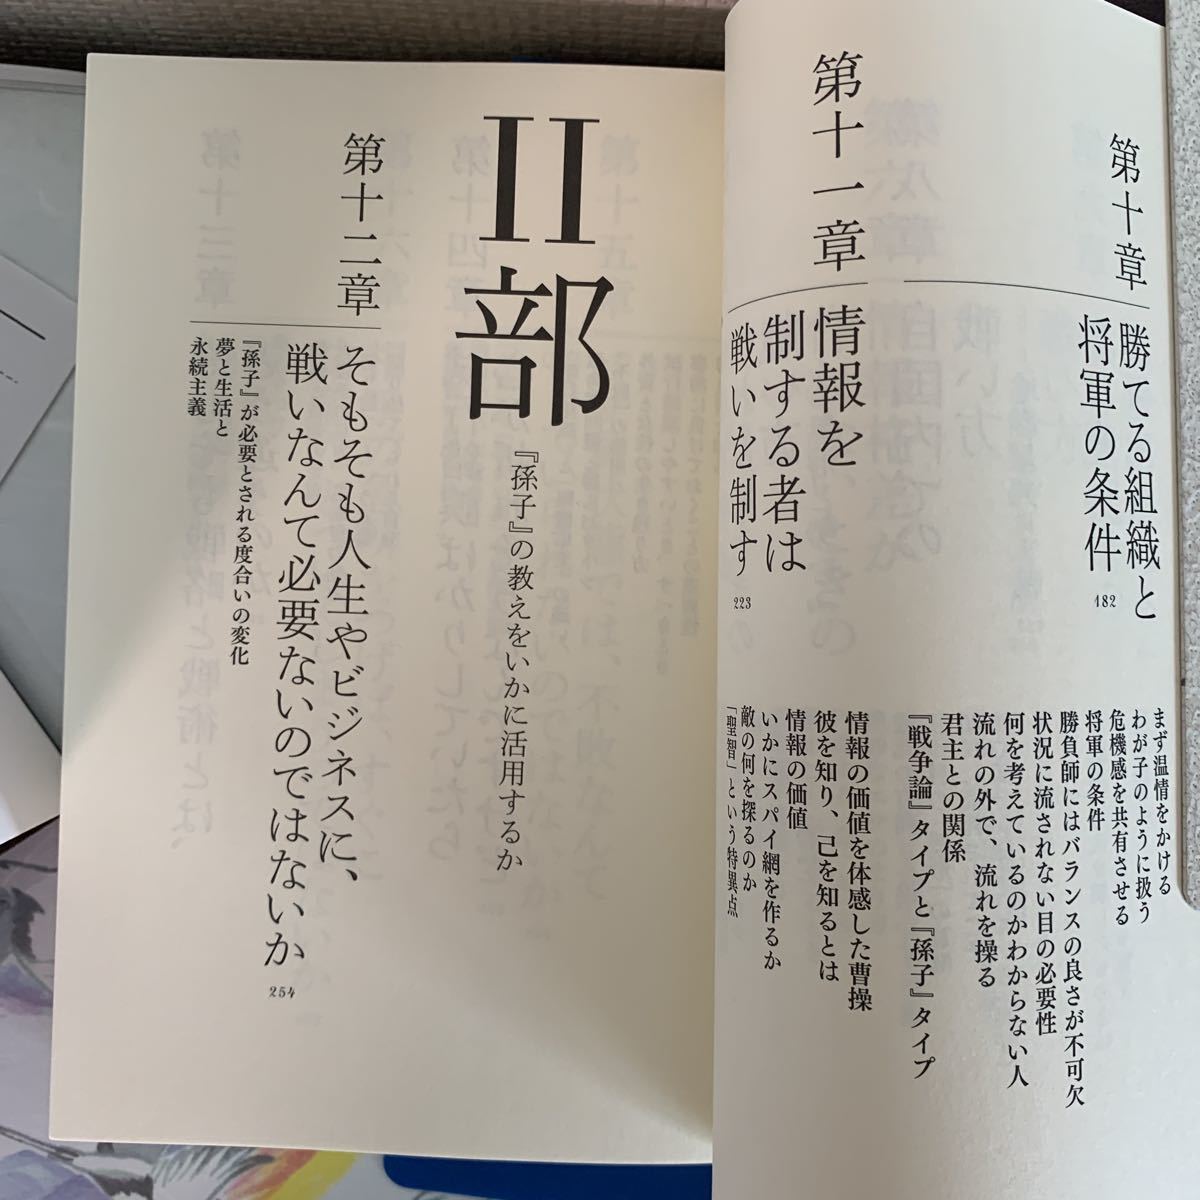  highest. strategy textbook ..2014/1/24. shop .( work ) Japan economics newspaper publish 